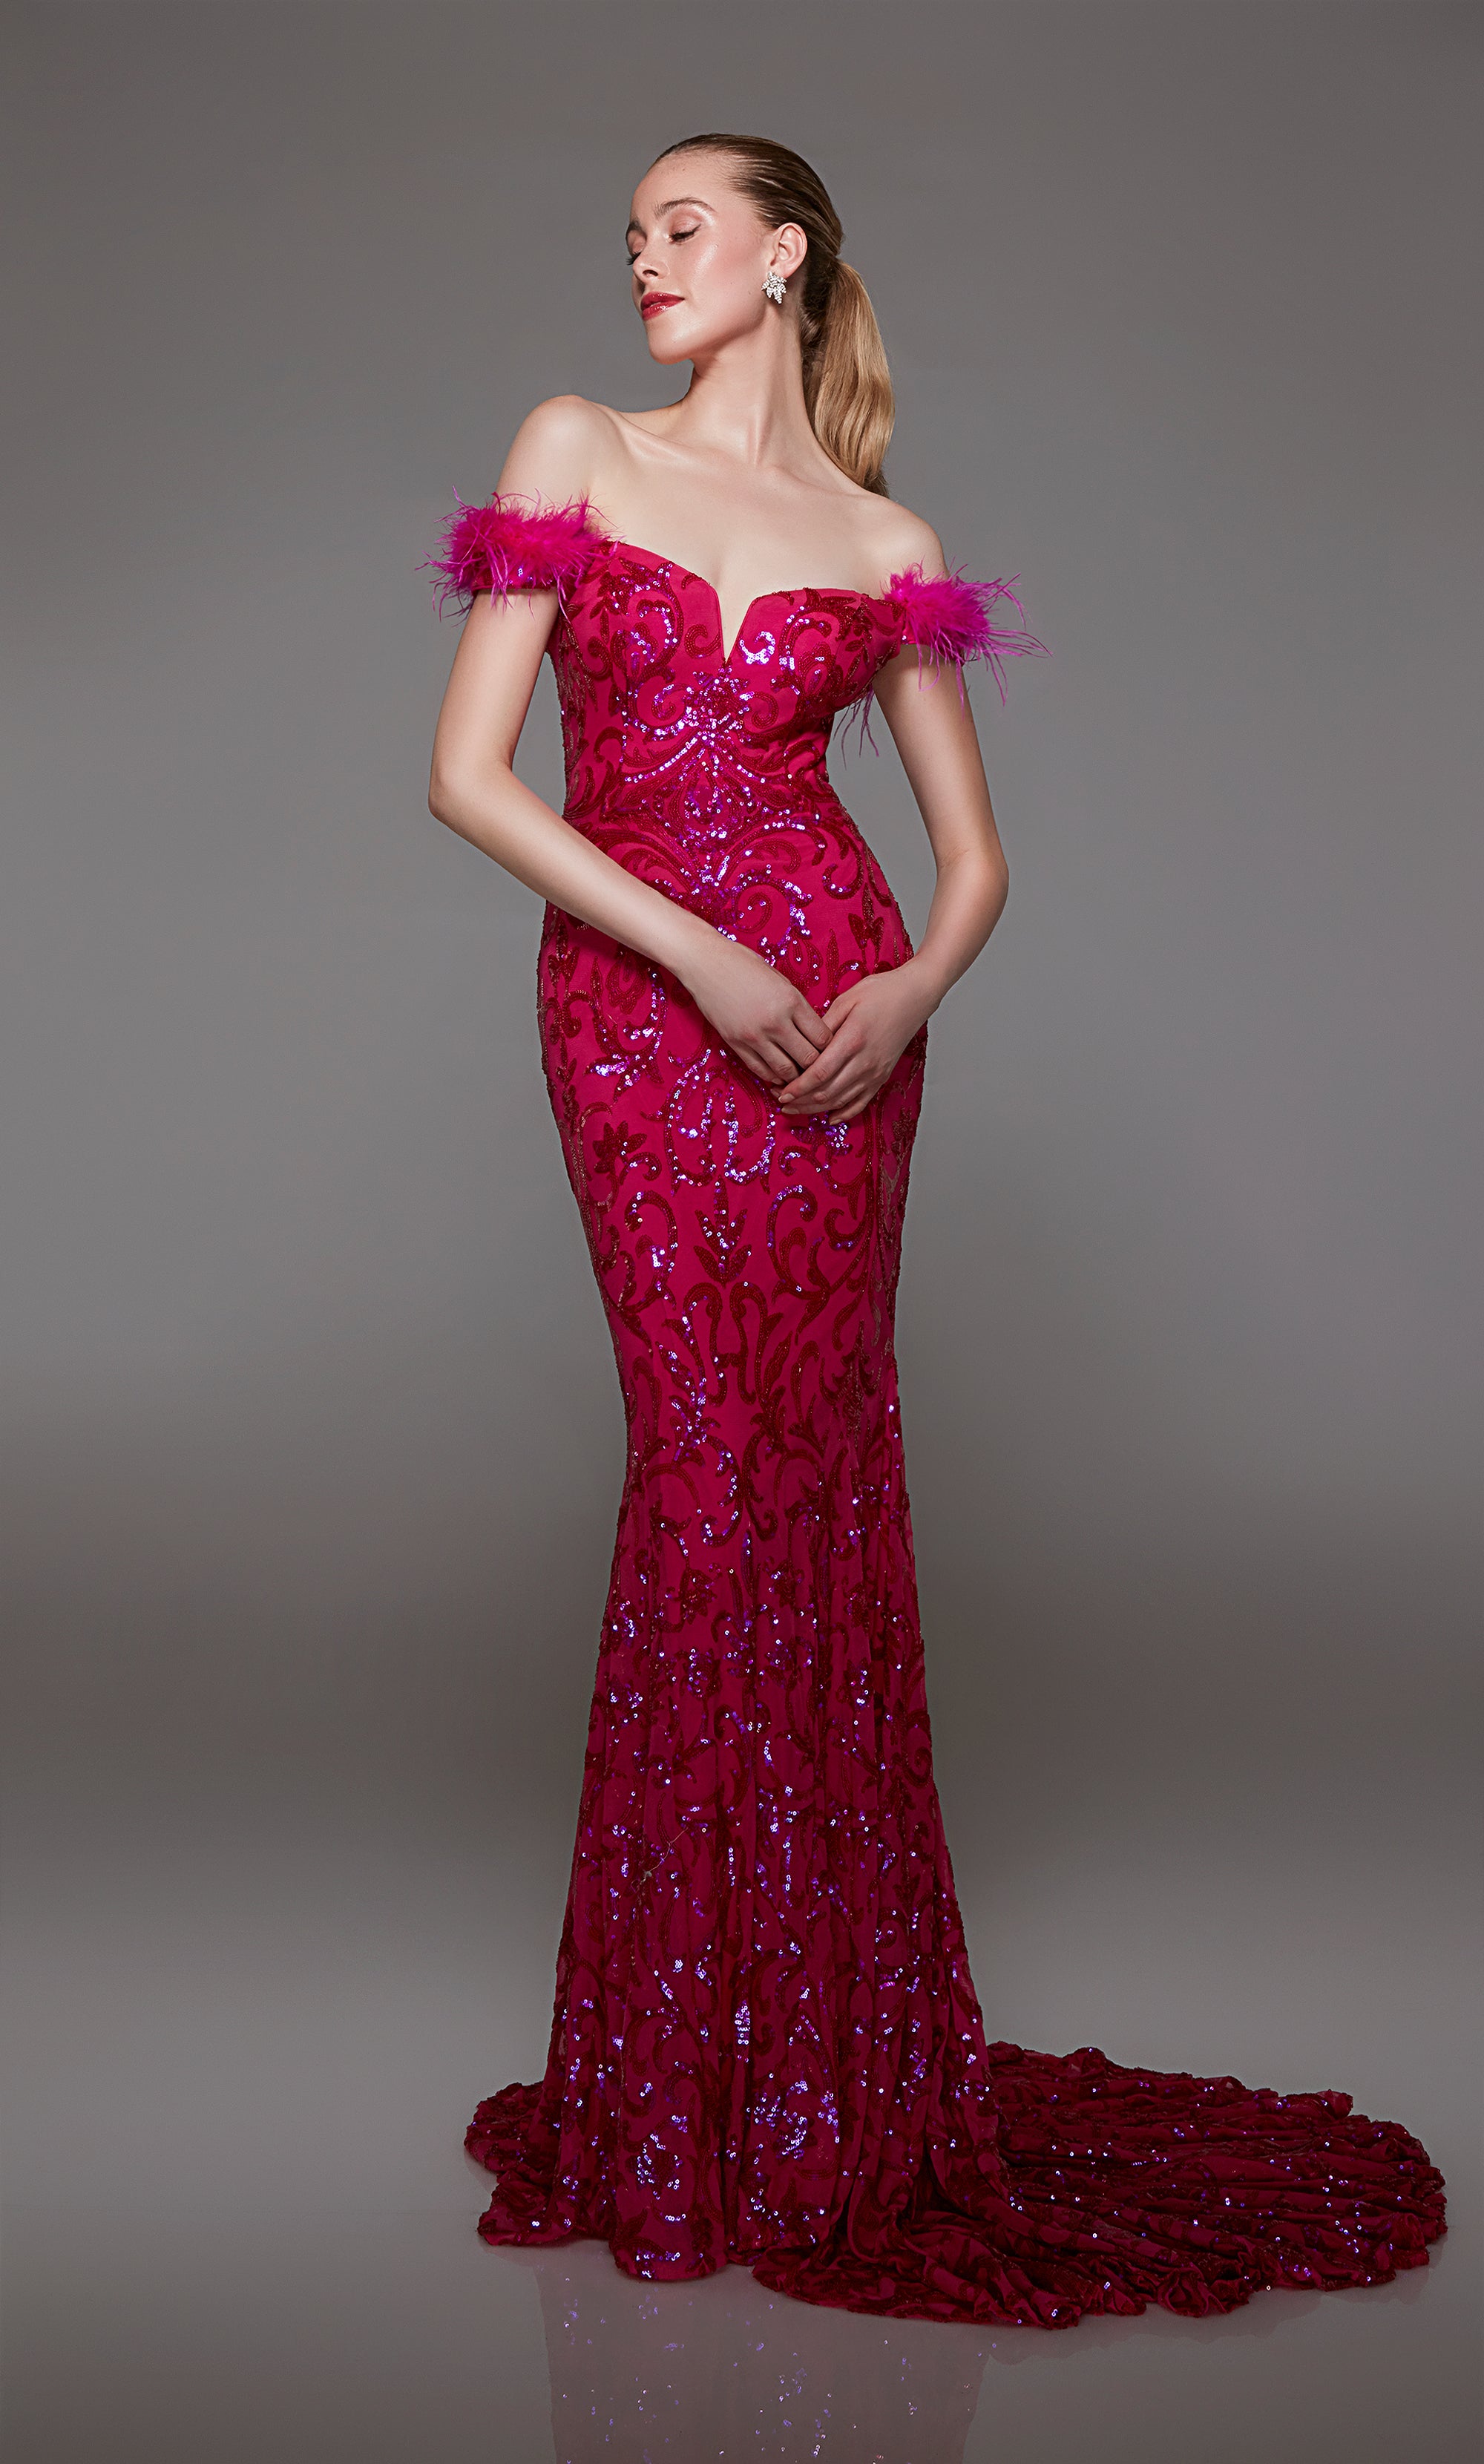 Pink off-shoulder designer dress: sequin embellishments, feather trim, lace-up back, and an glamorous train for elegant allure.